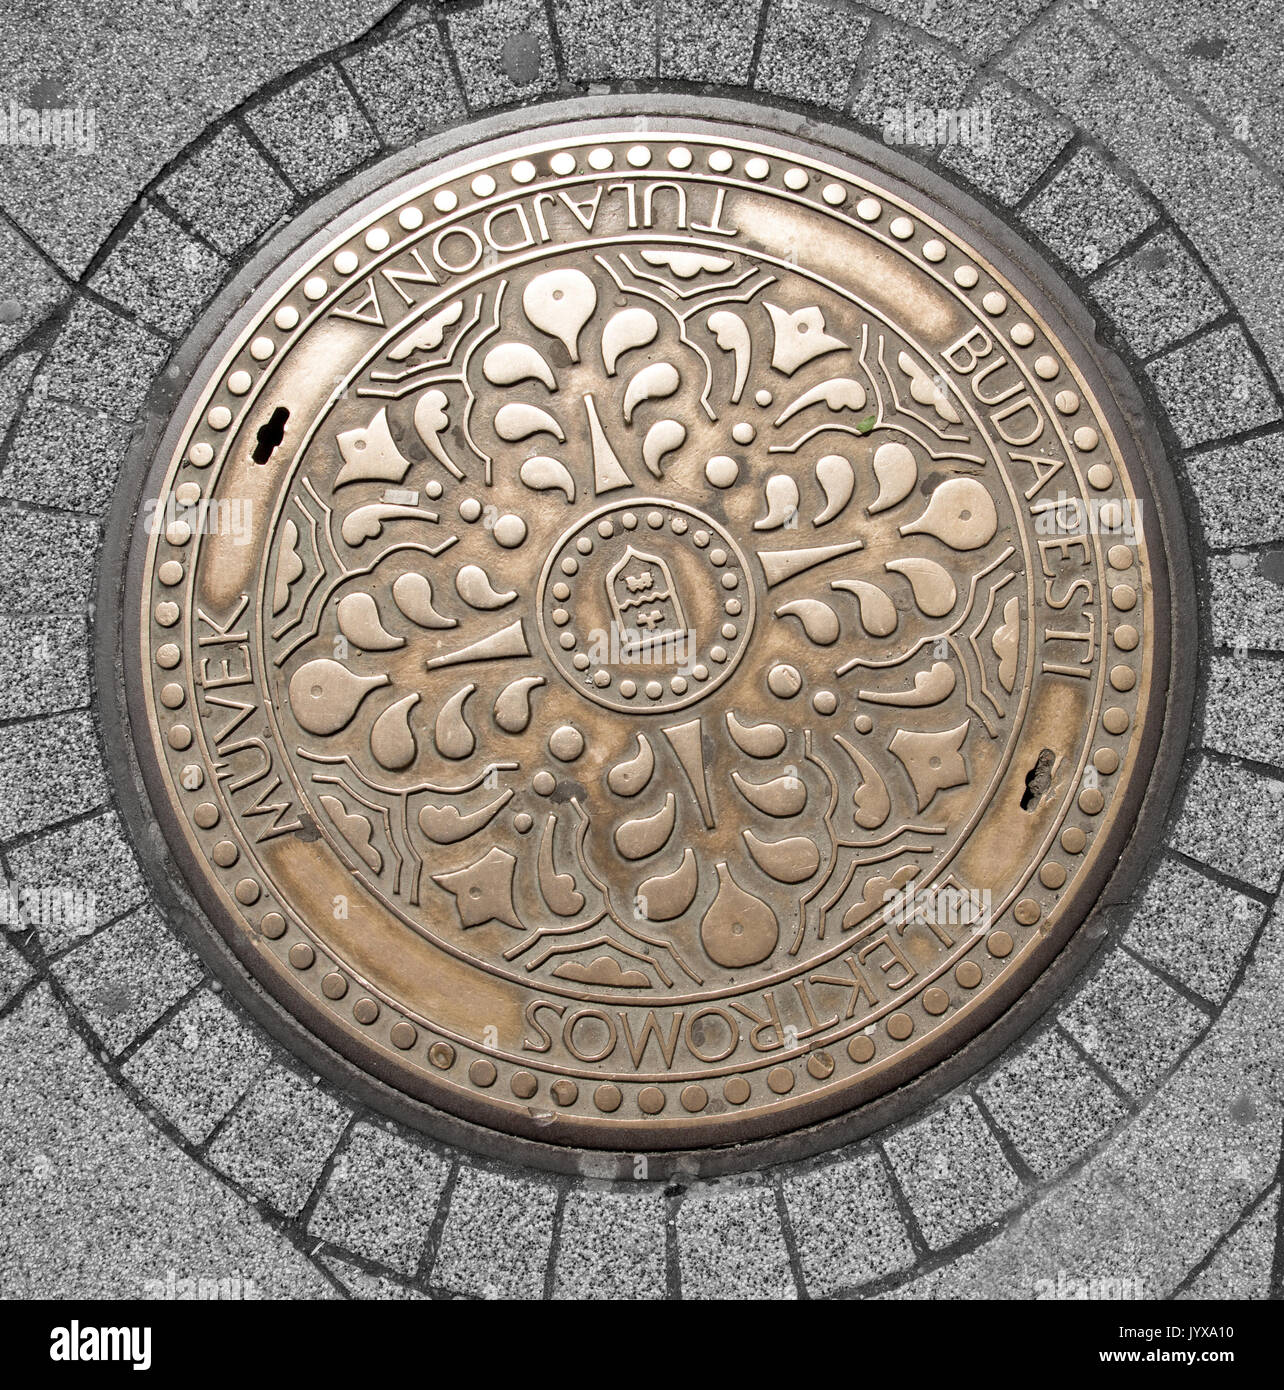 Budapest manhole cover Stock Photo